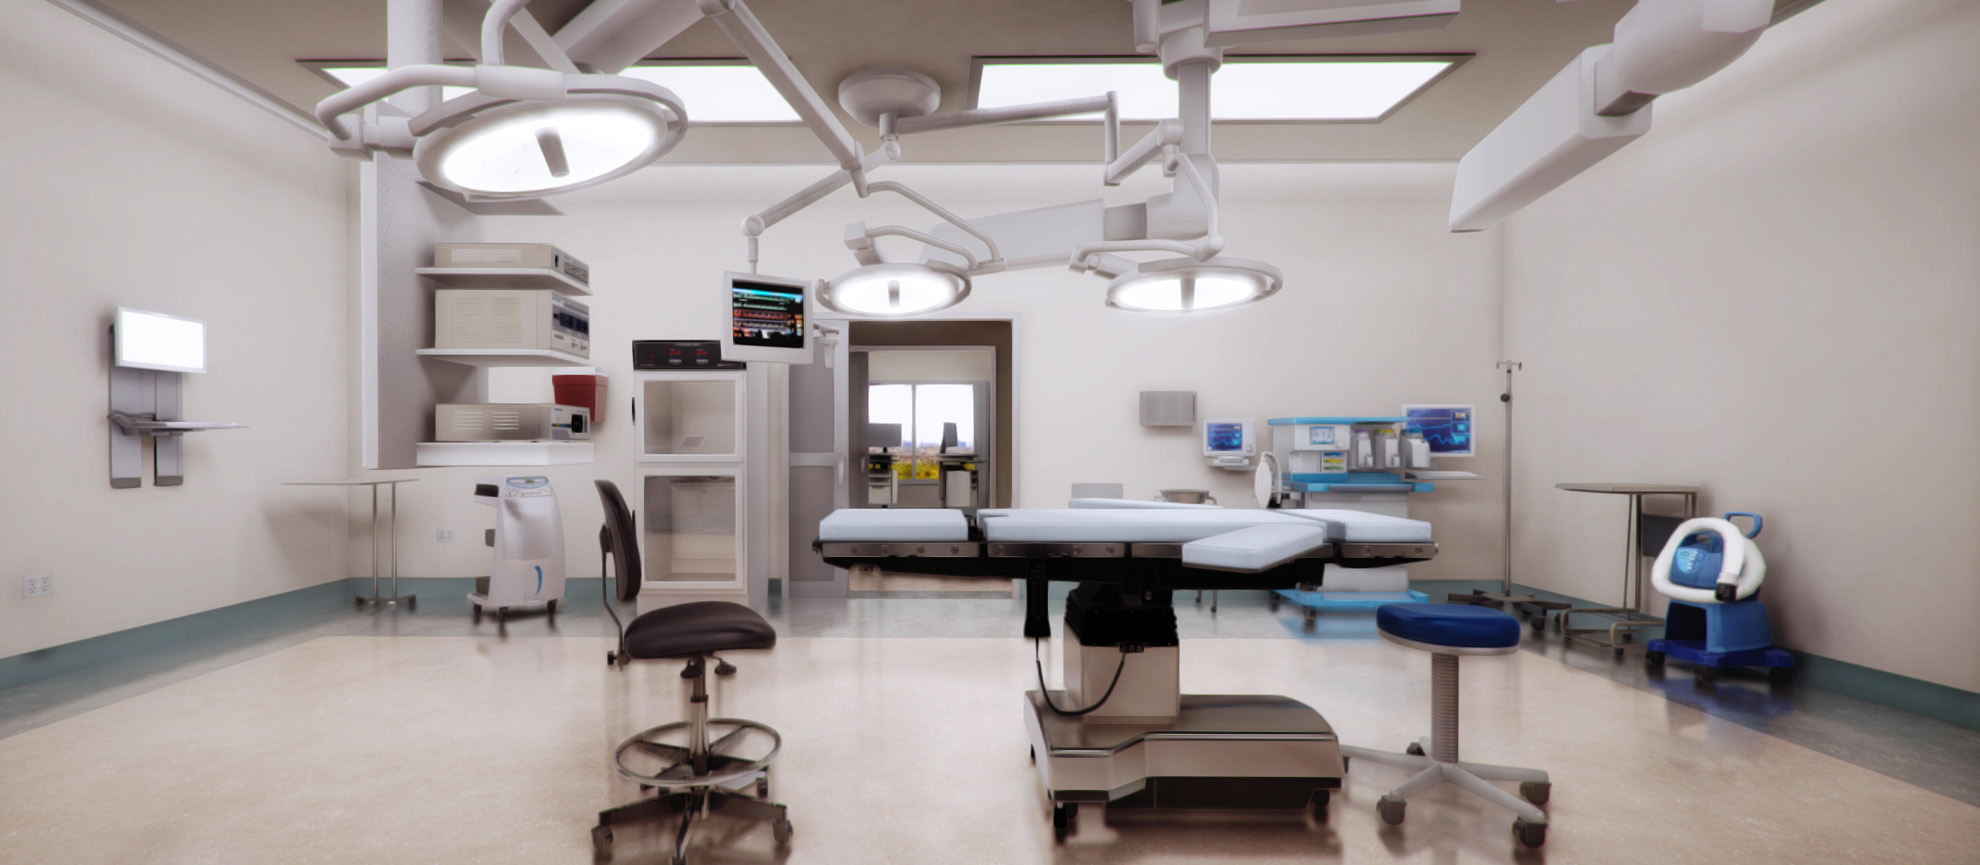 Medical Environments in Virtual Reality